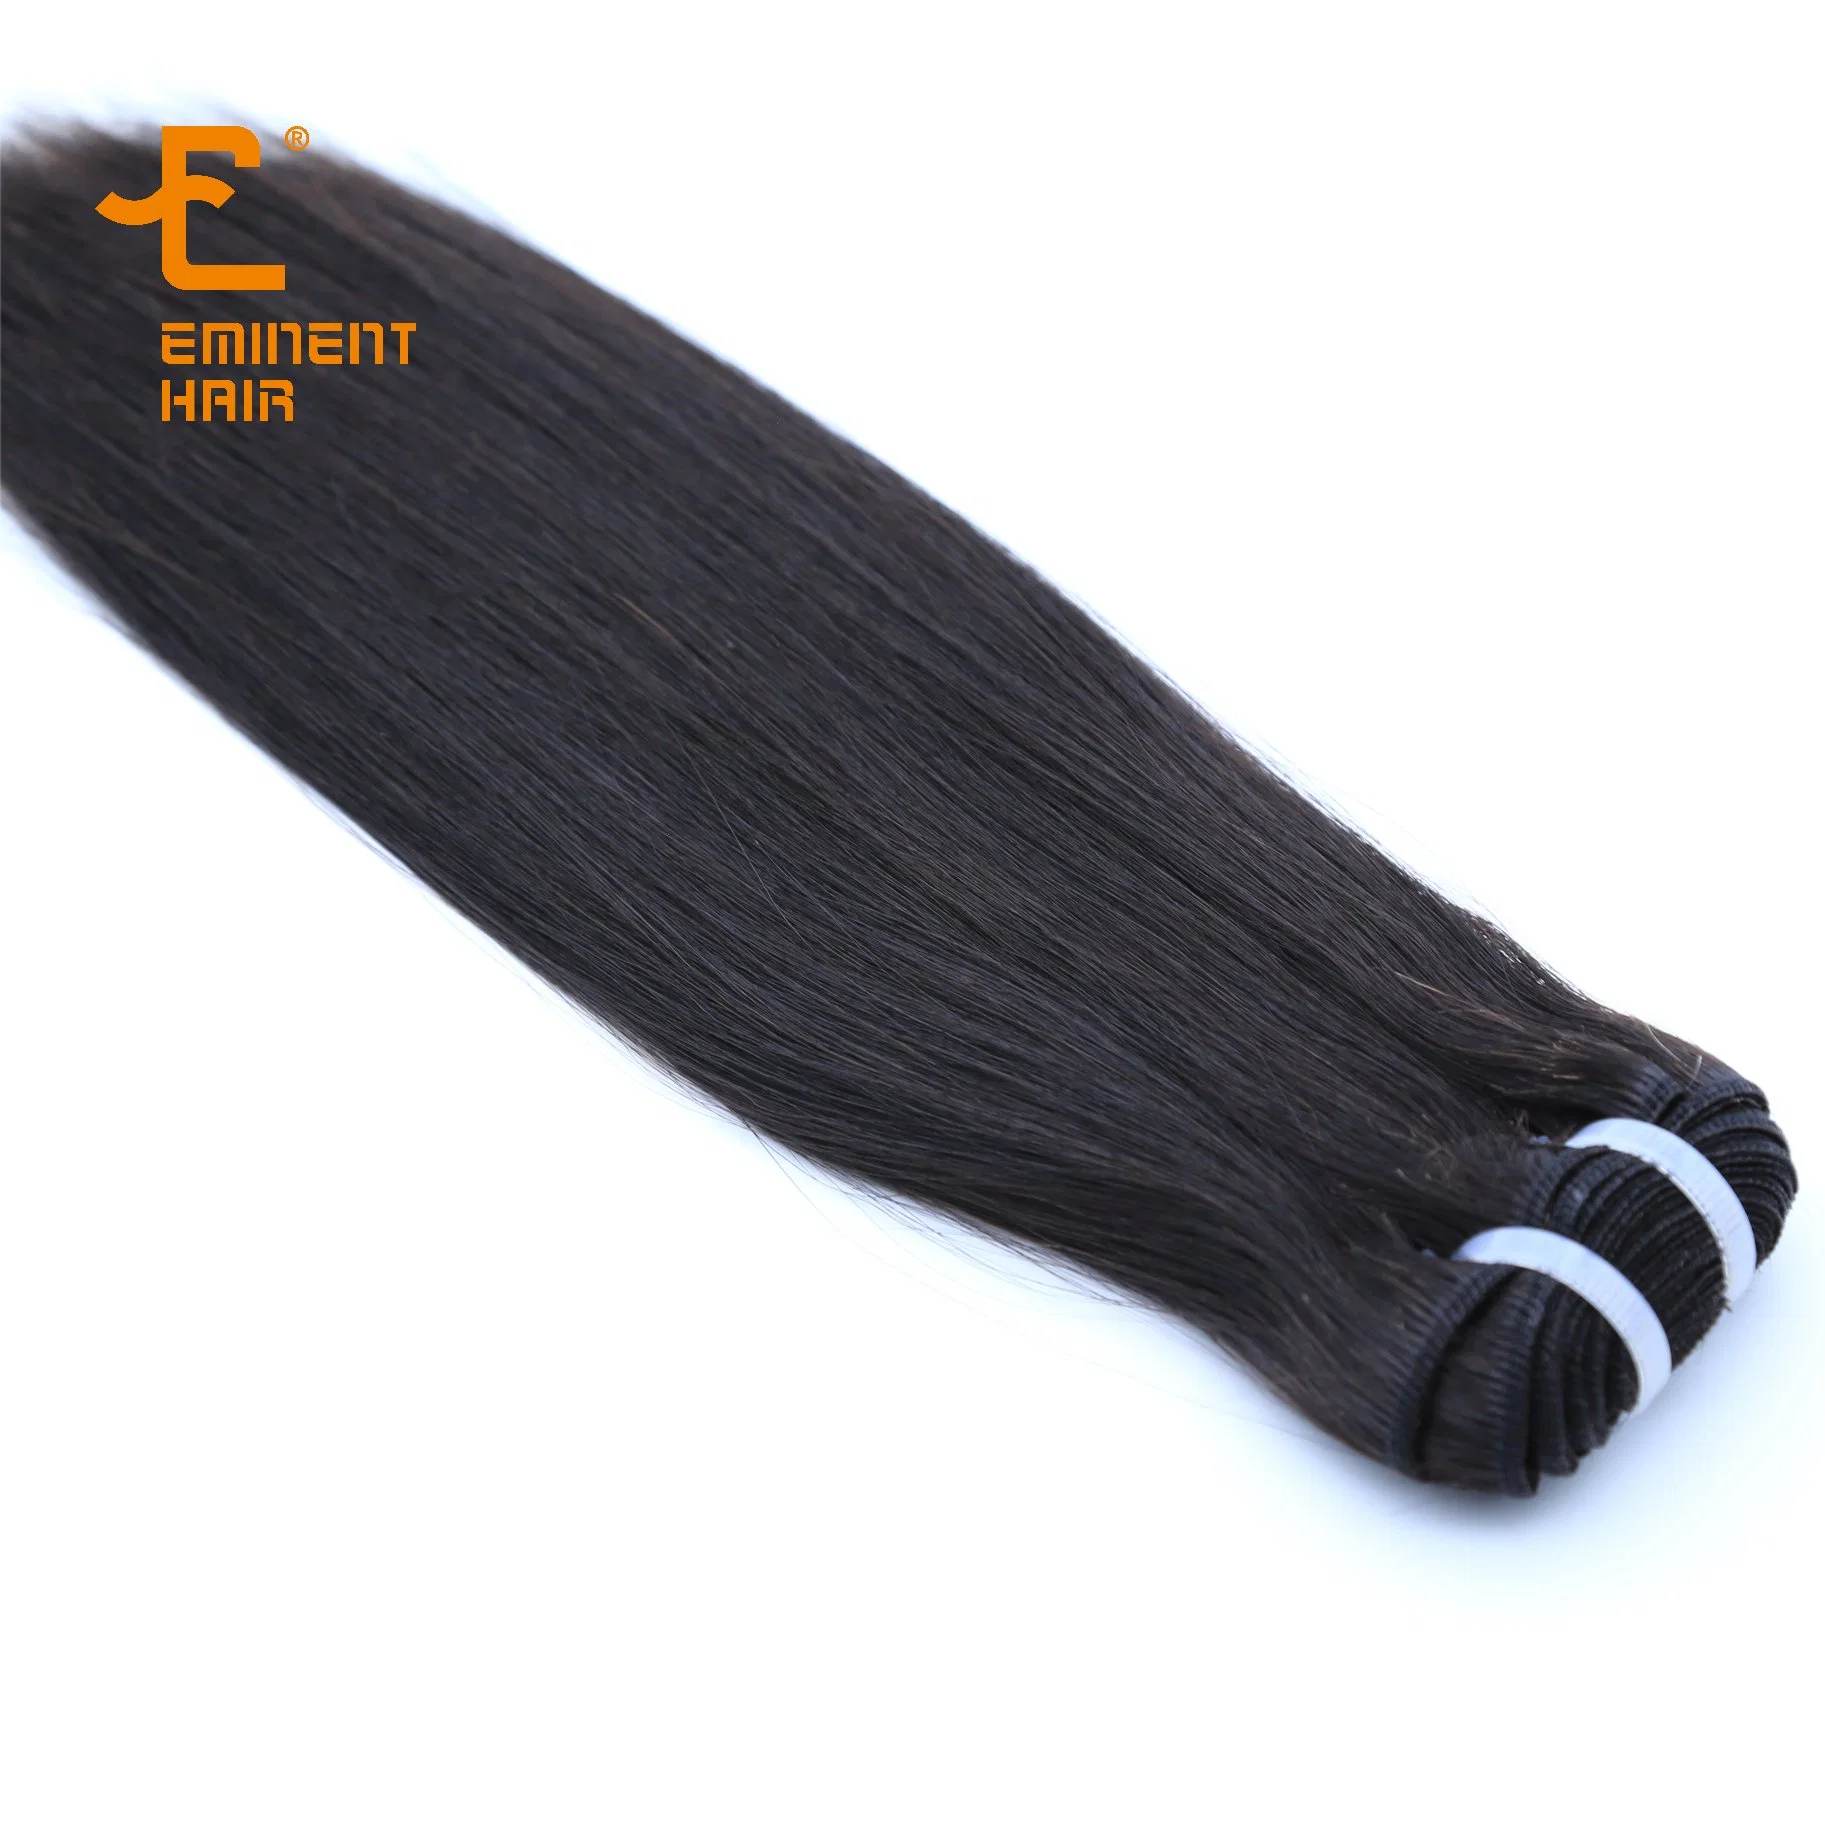 Eminent Hair Factory 10A Virgin Hair Weft Straight Weaving